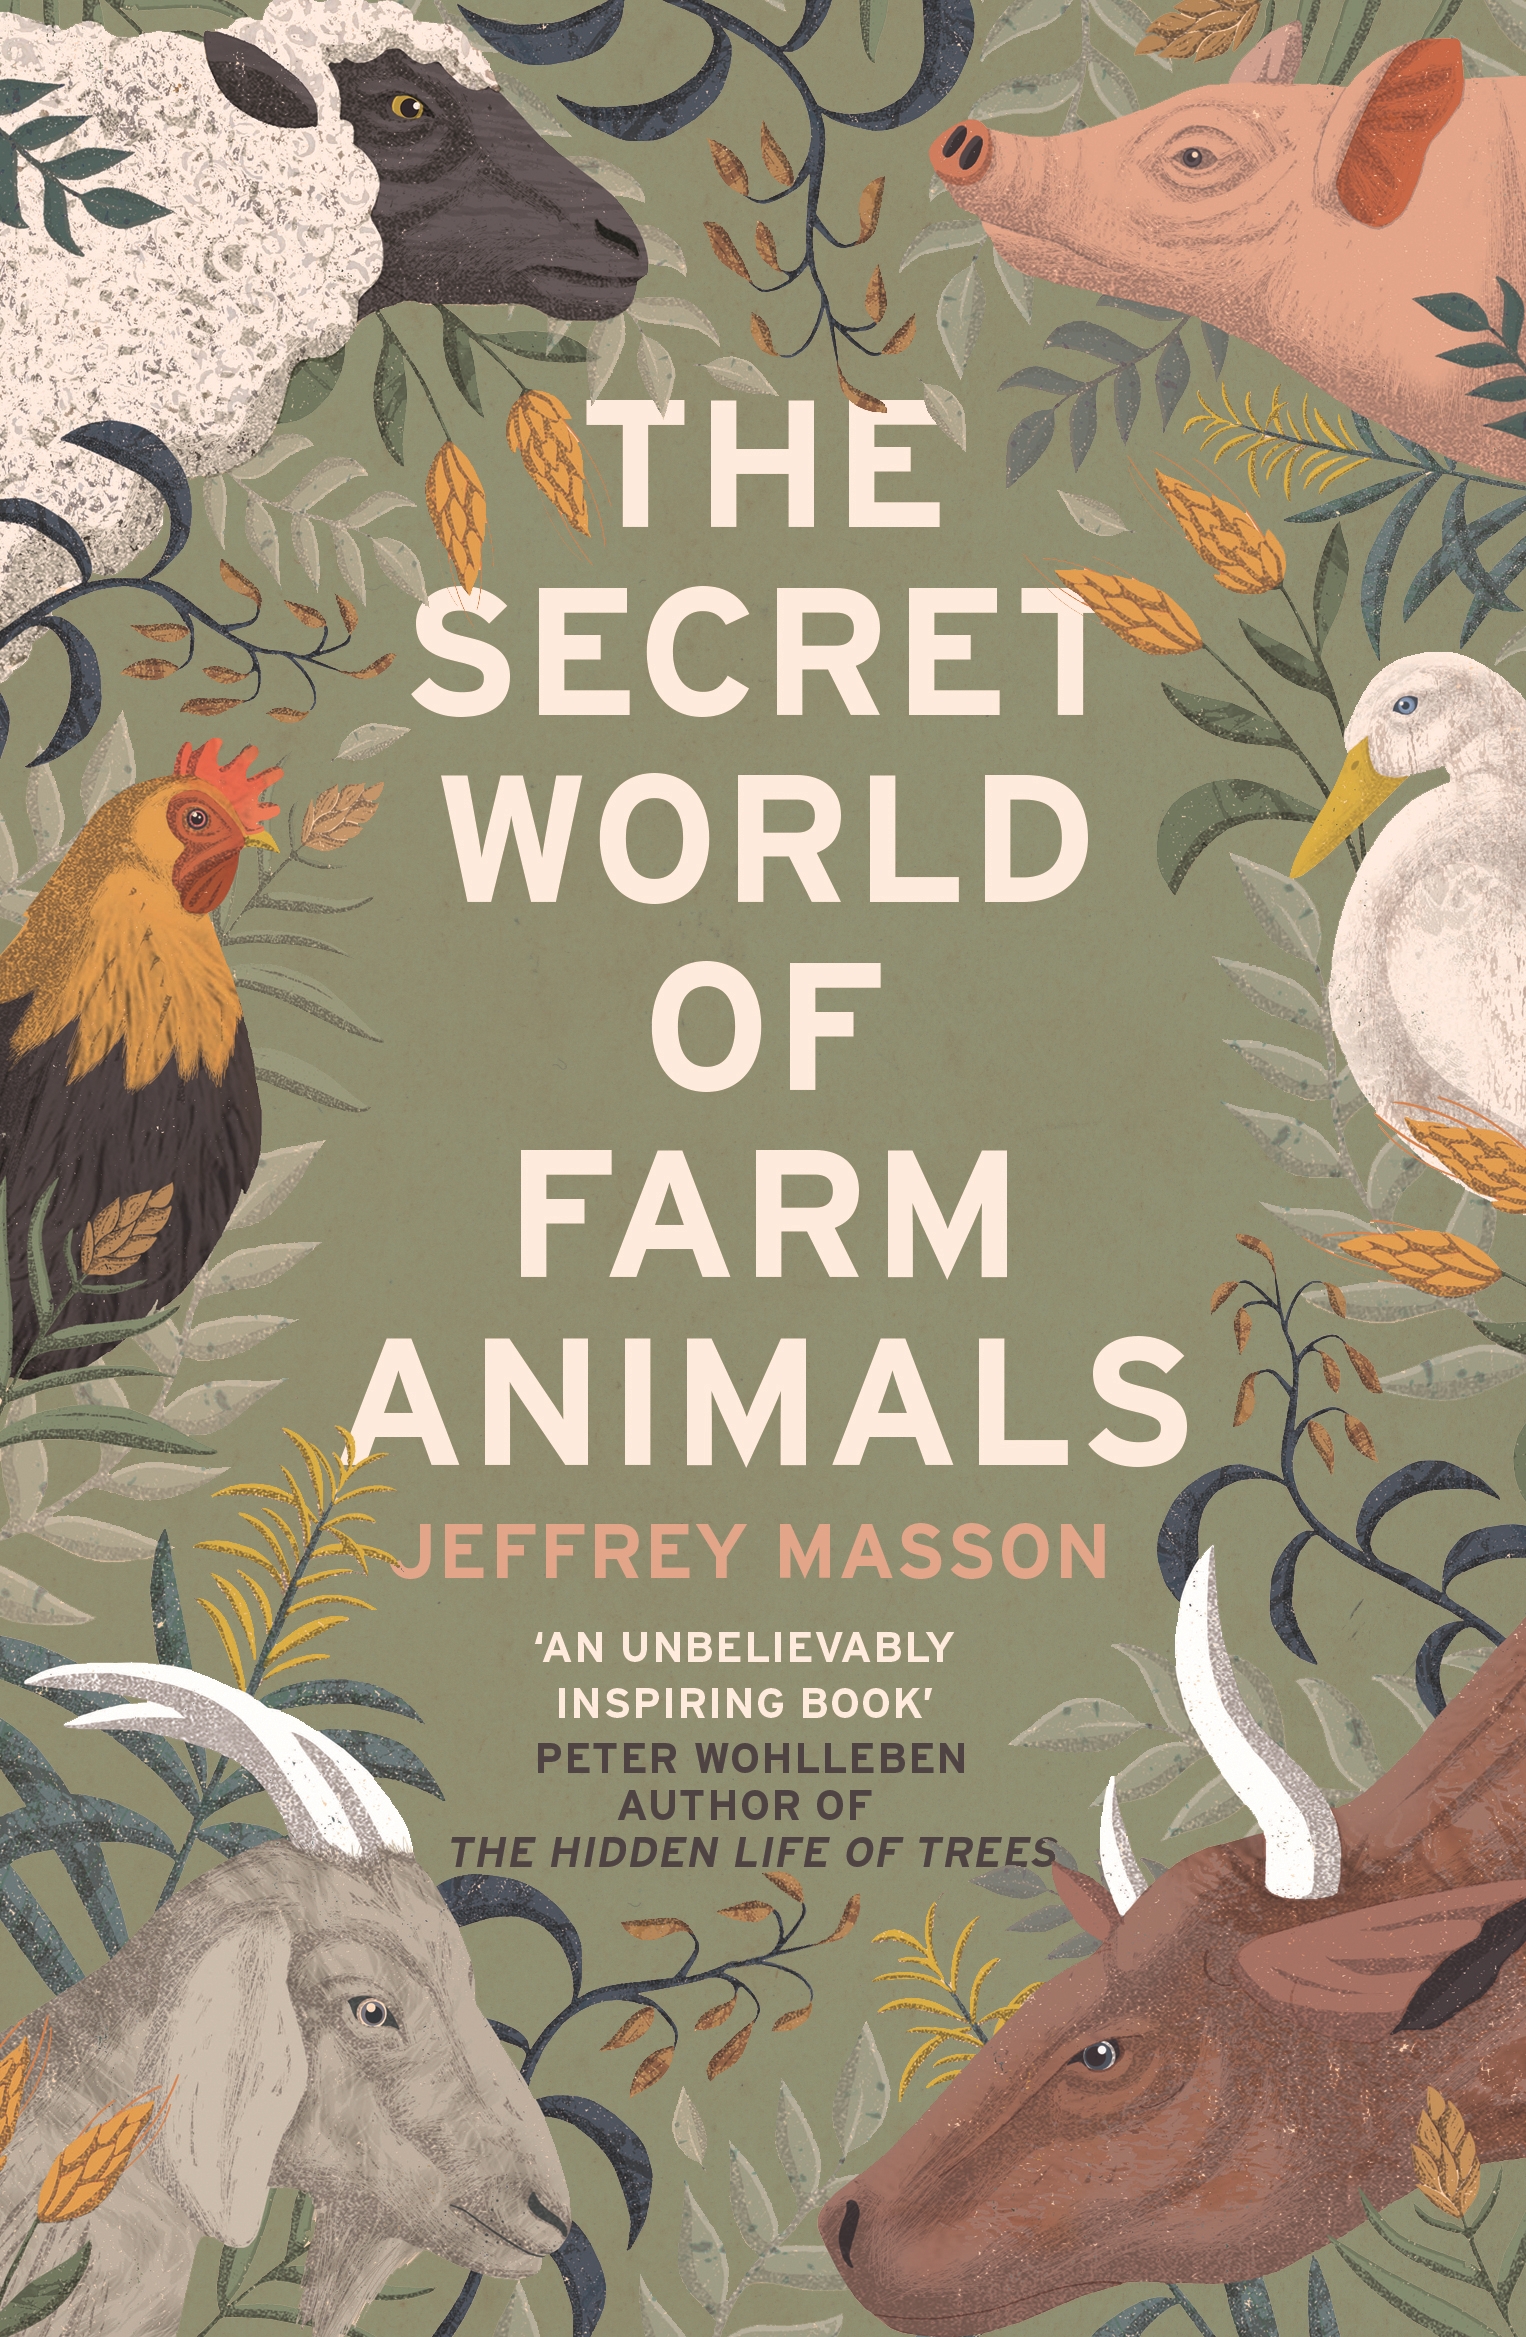 The Secret World of Farm Animals by Jeffrey Masson - Penguin Books Australia